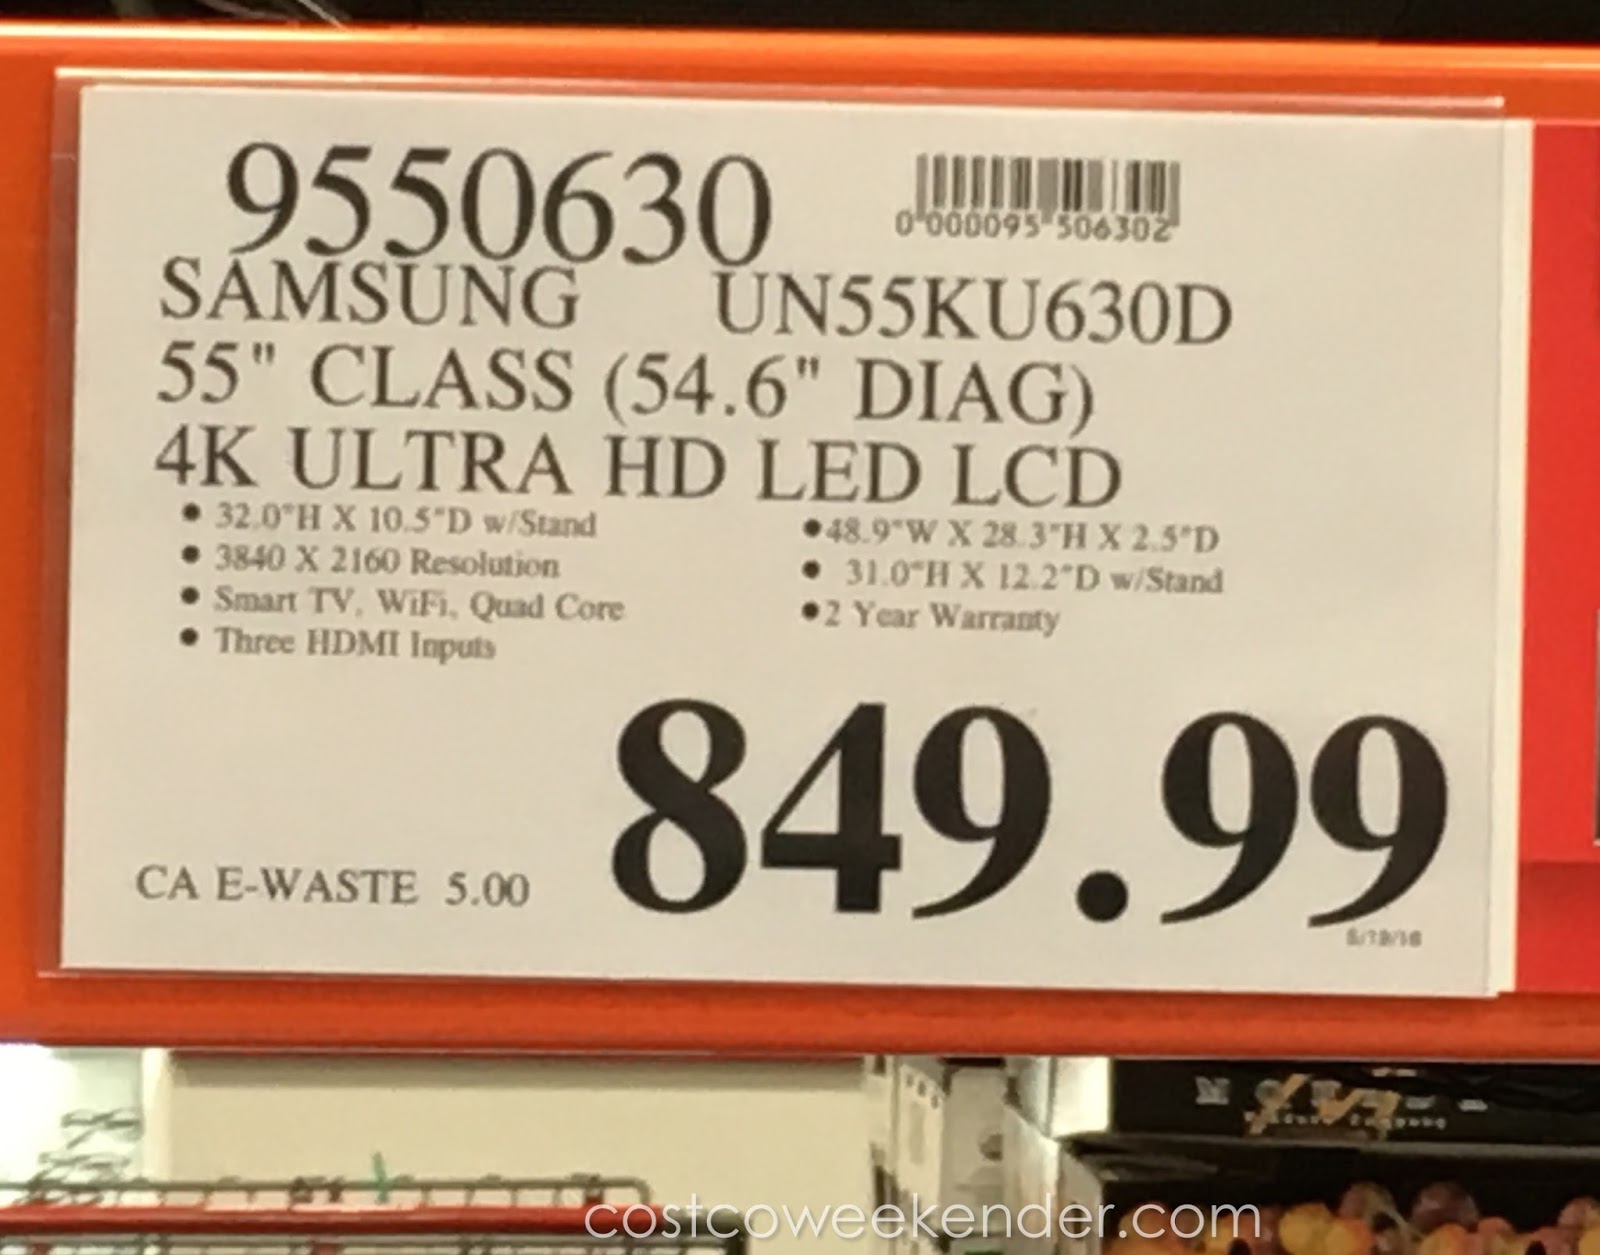 samsung-un55ku630d-55-4k-ultra-hd-led-lcd-tv-costco-weekender